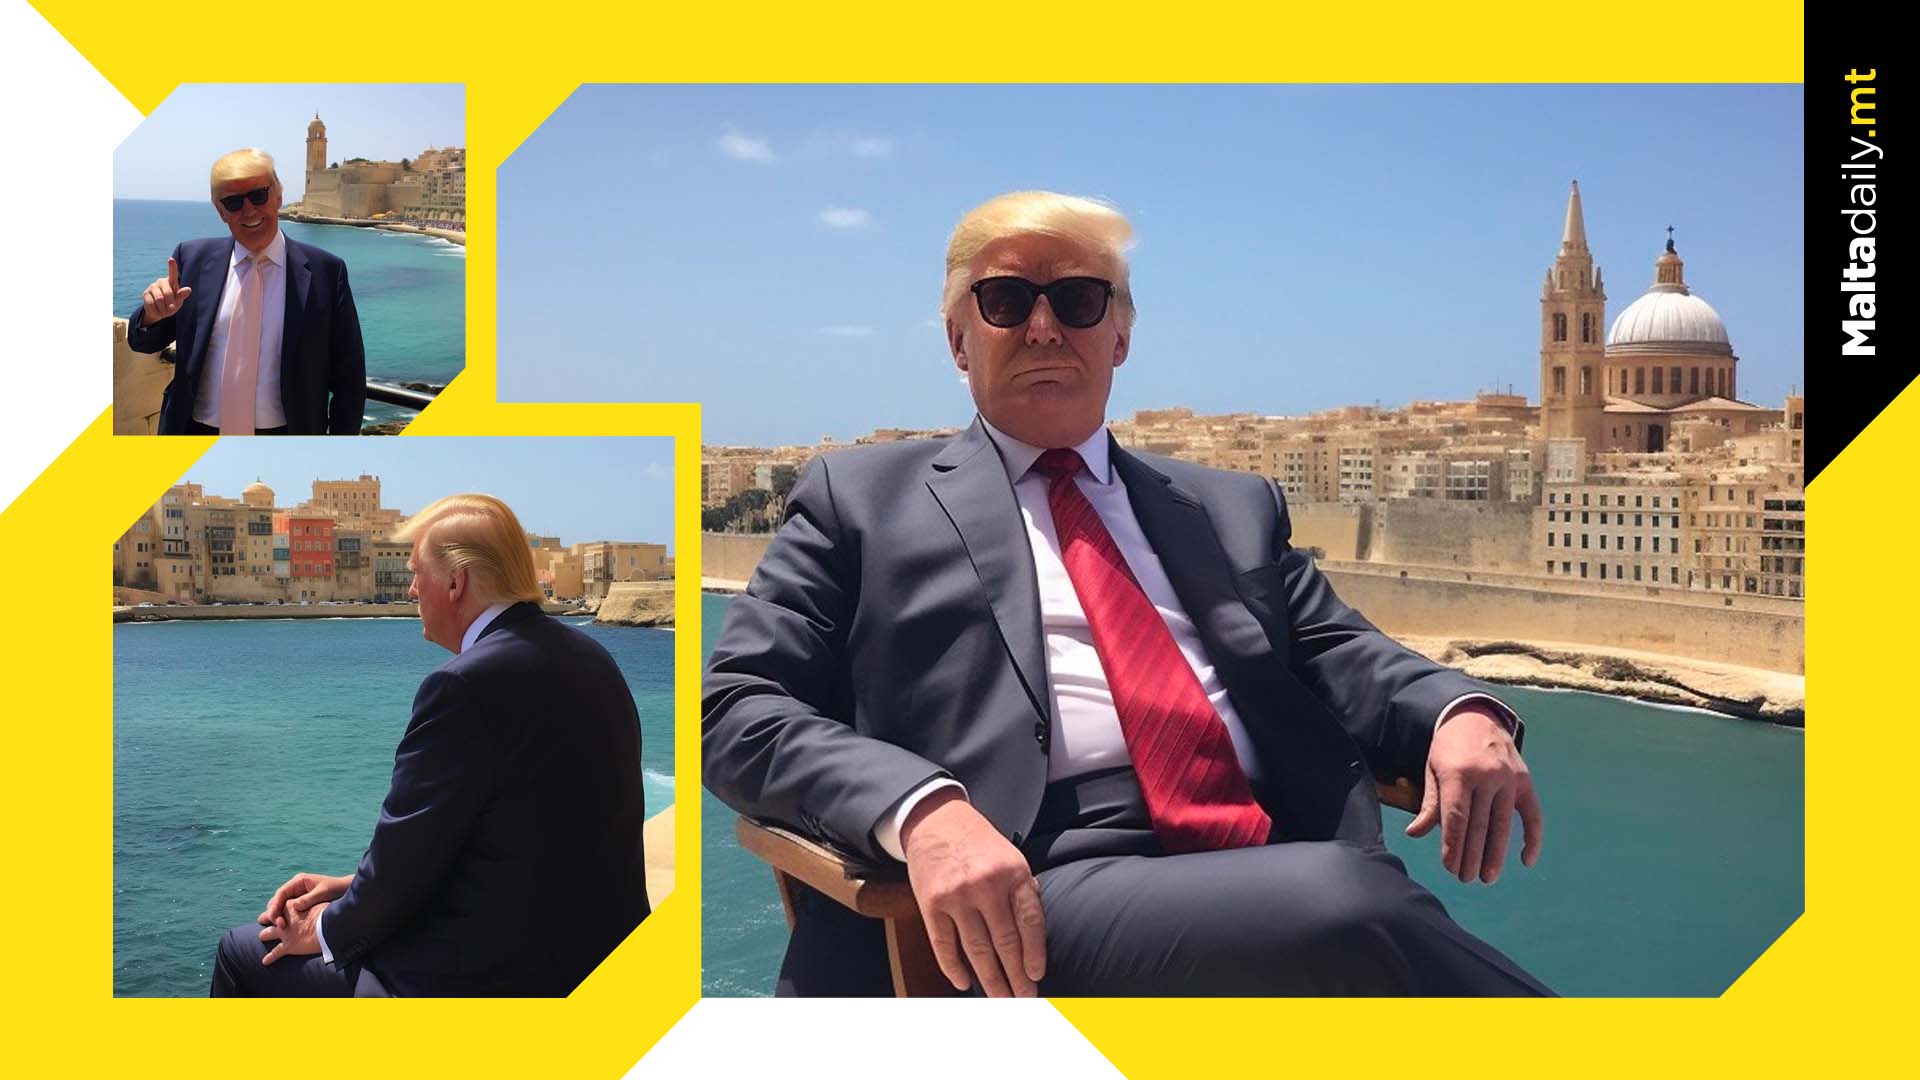 What If Donald Trump Visited Malta?